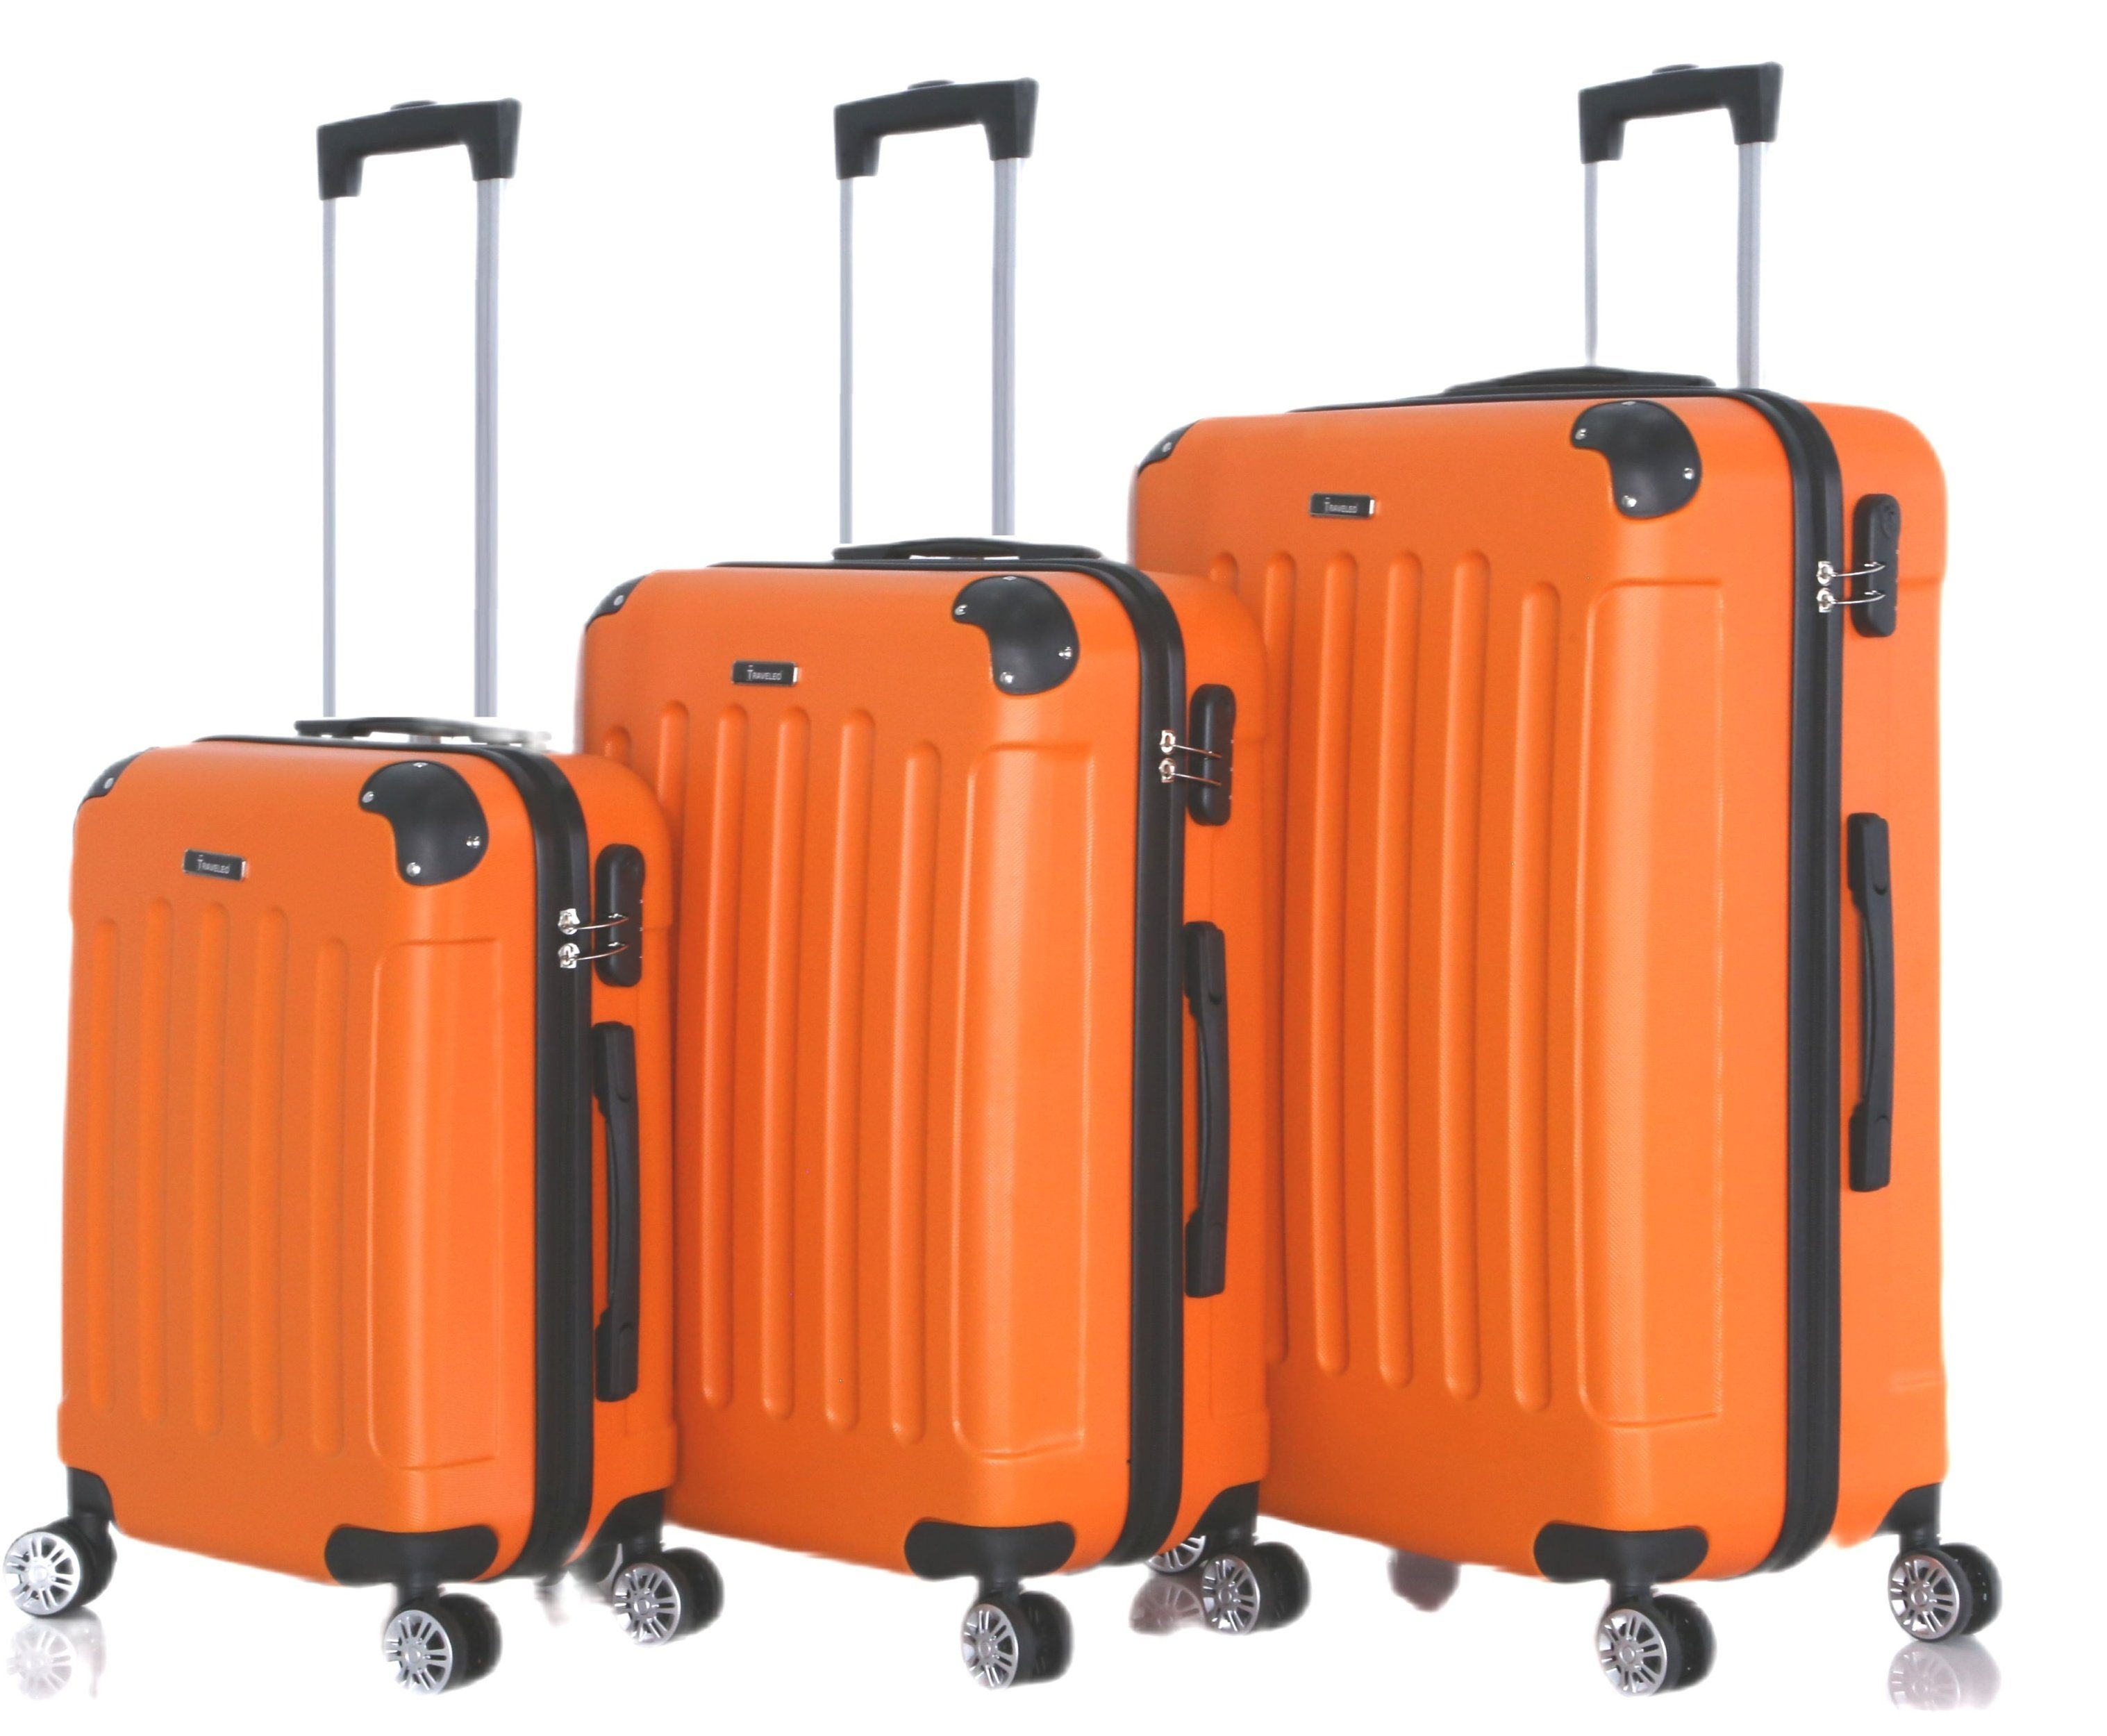 Rungassi Kofferset Hartschalenkoffer Trolley Reisekoffer Koffer Set Rungassi orange ABS01 | Trolley-Sets